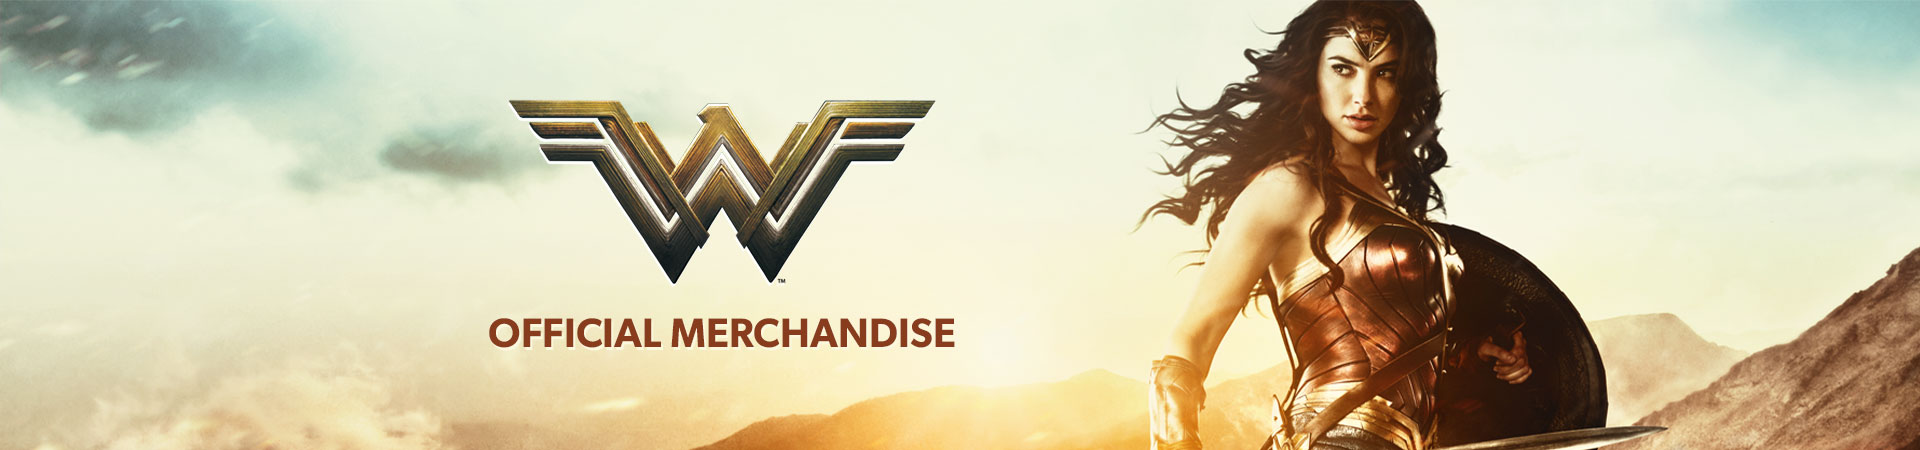 Wonder Woman - Official Merchandise